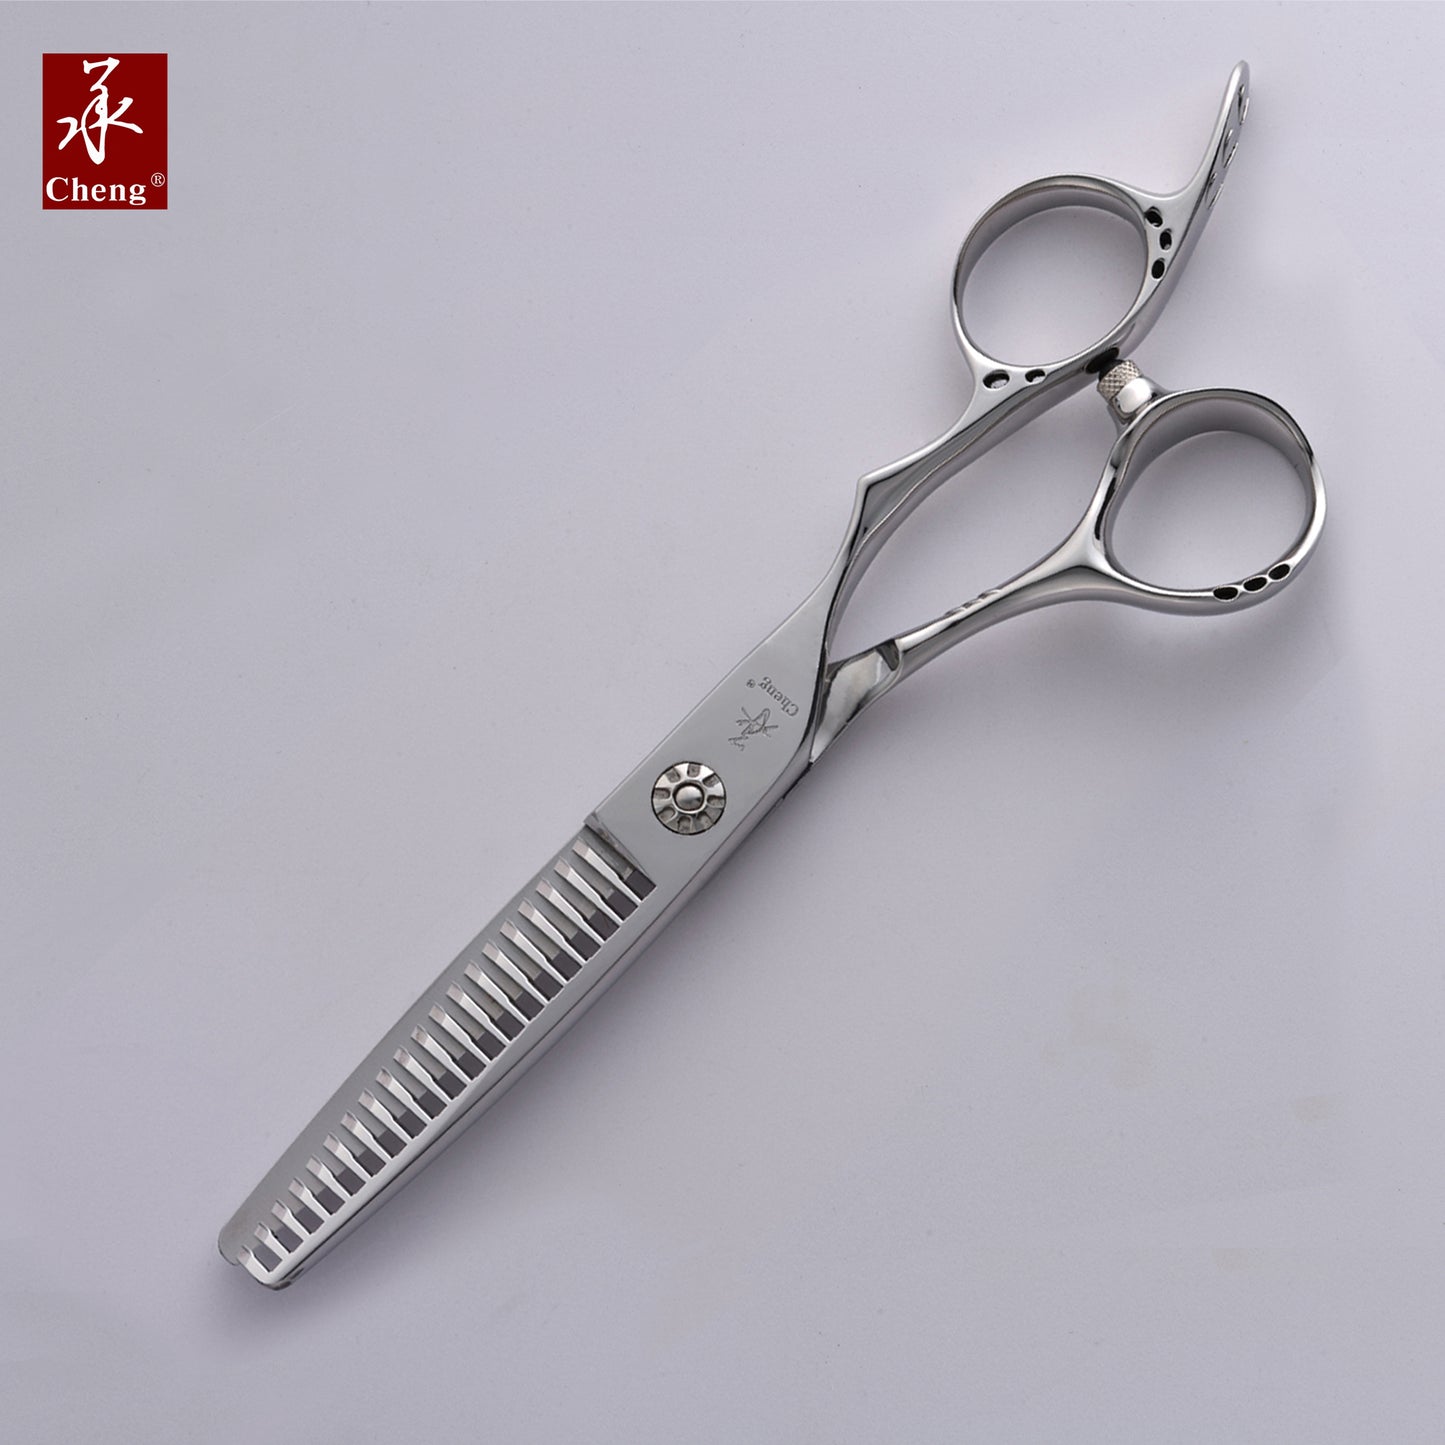 CA4-620 High Luxury Hair Thinning Scissors Thinning Shear 6 Inch 20Teeth